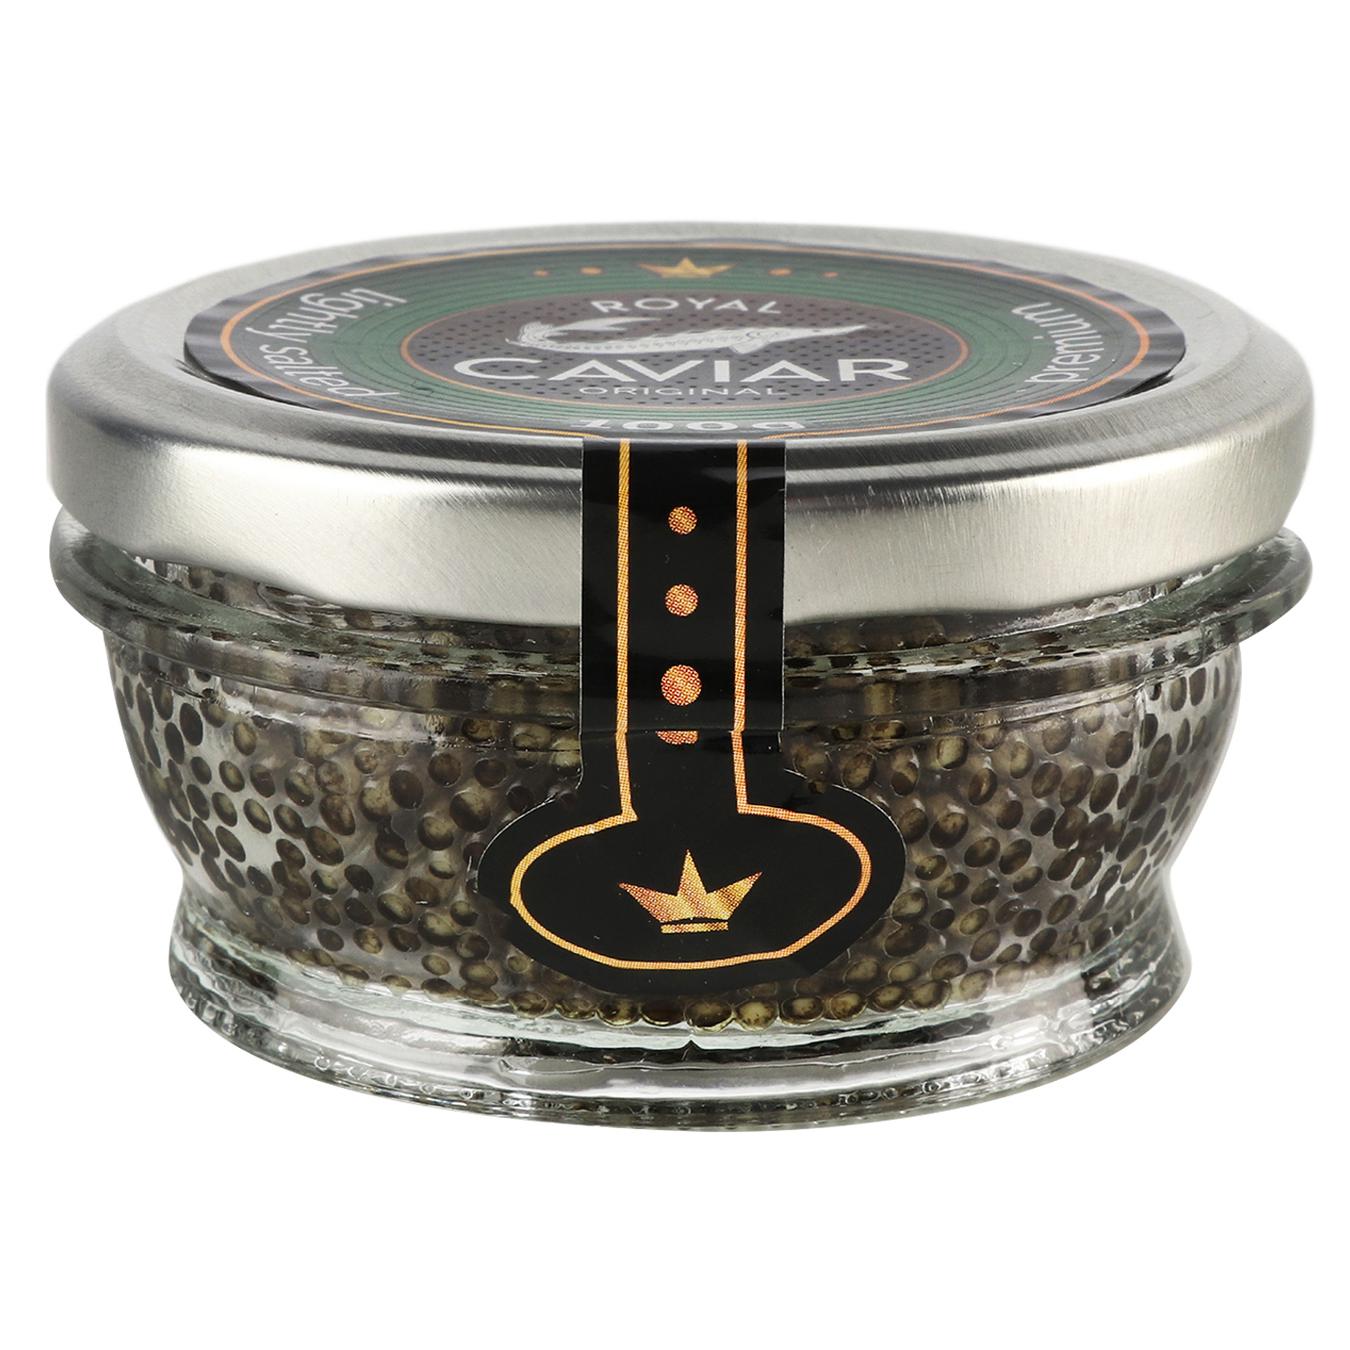 Sturgeon caviar Royal Caviar Premium granular 100g